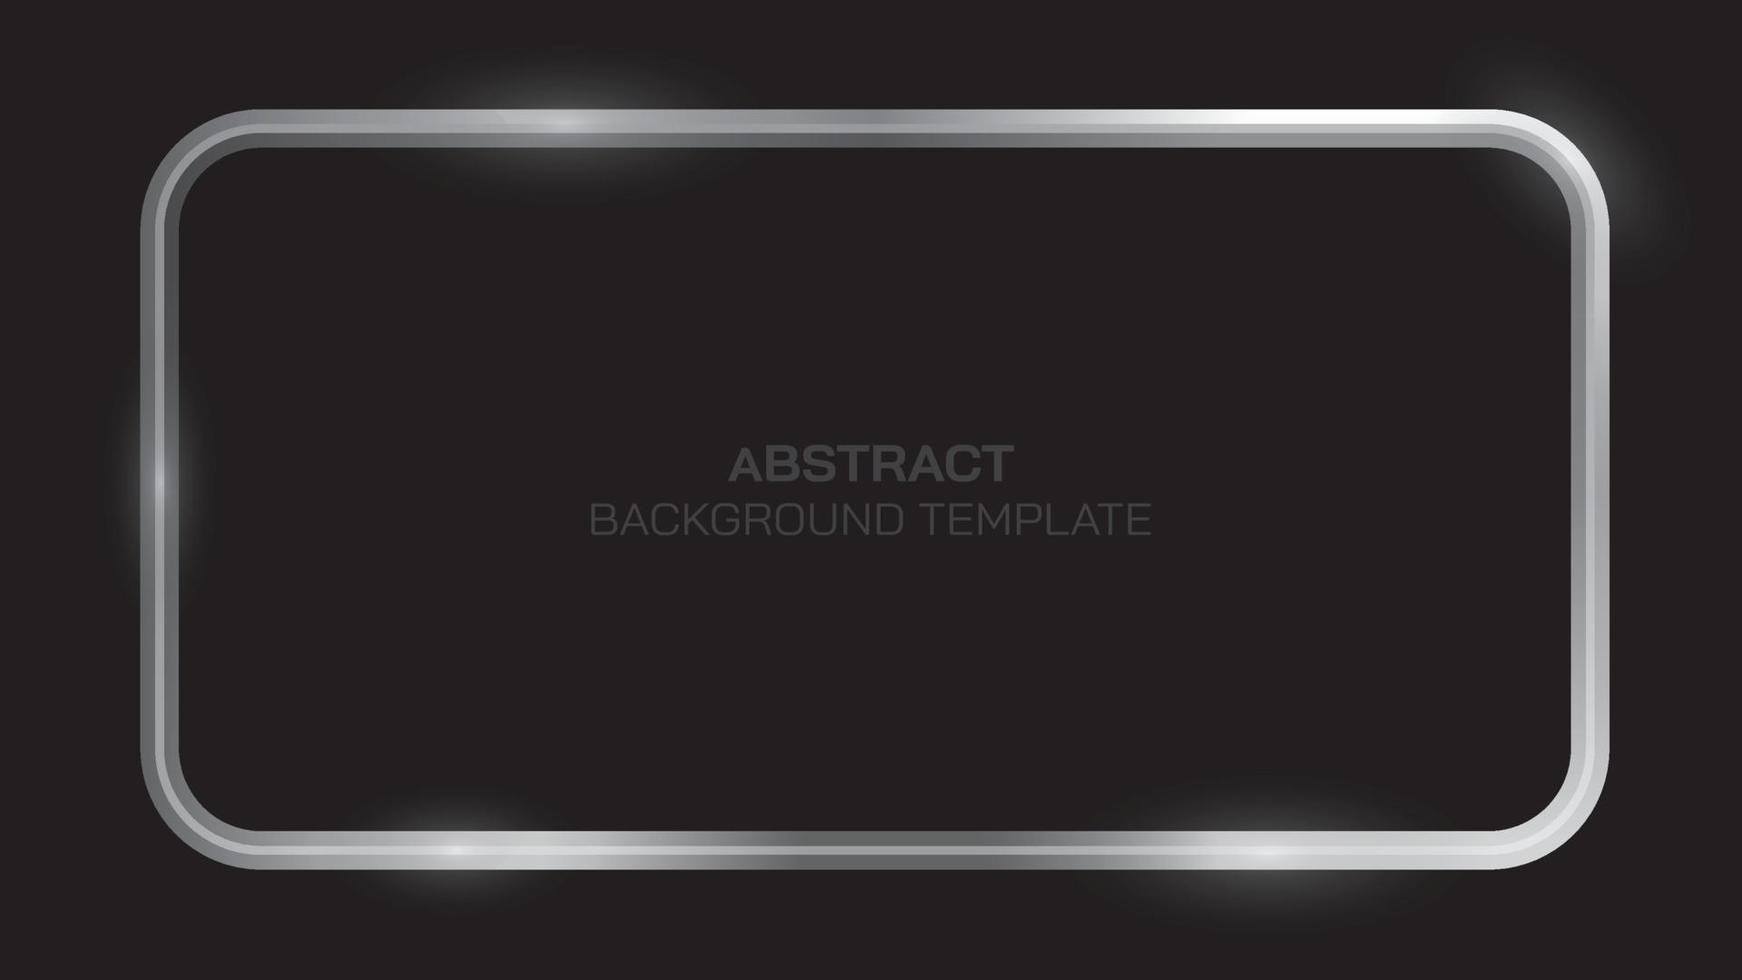 marco rectangular de metal con plantilla de efectos brillantes sobre fondo negro. vector